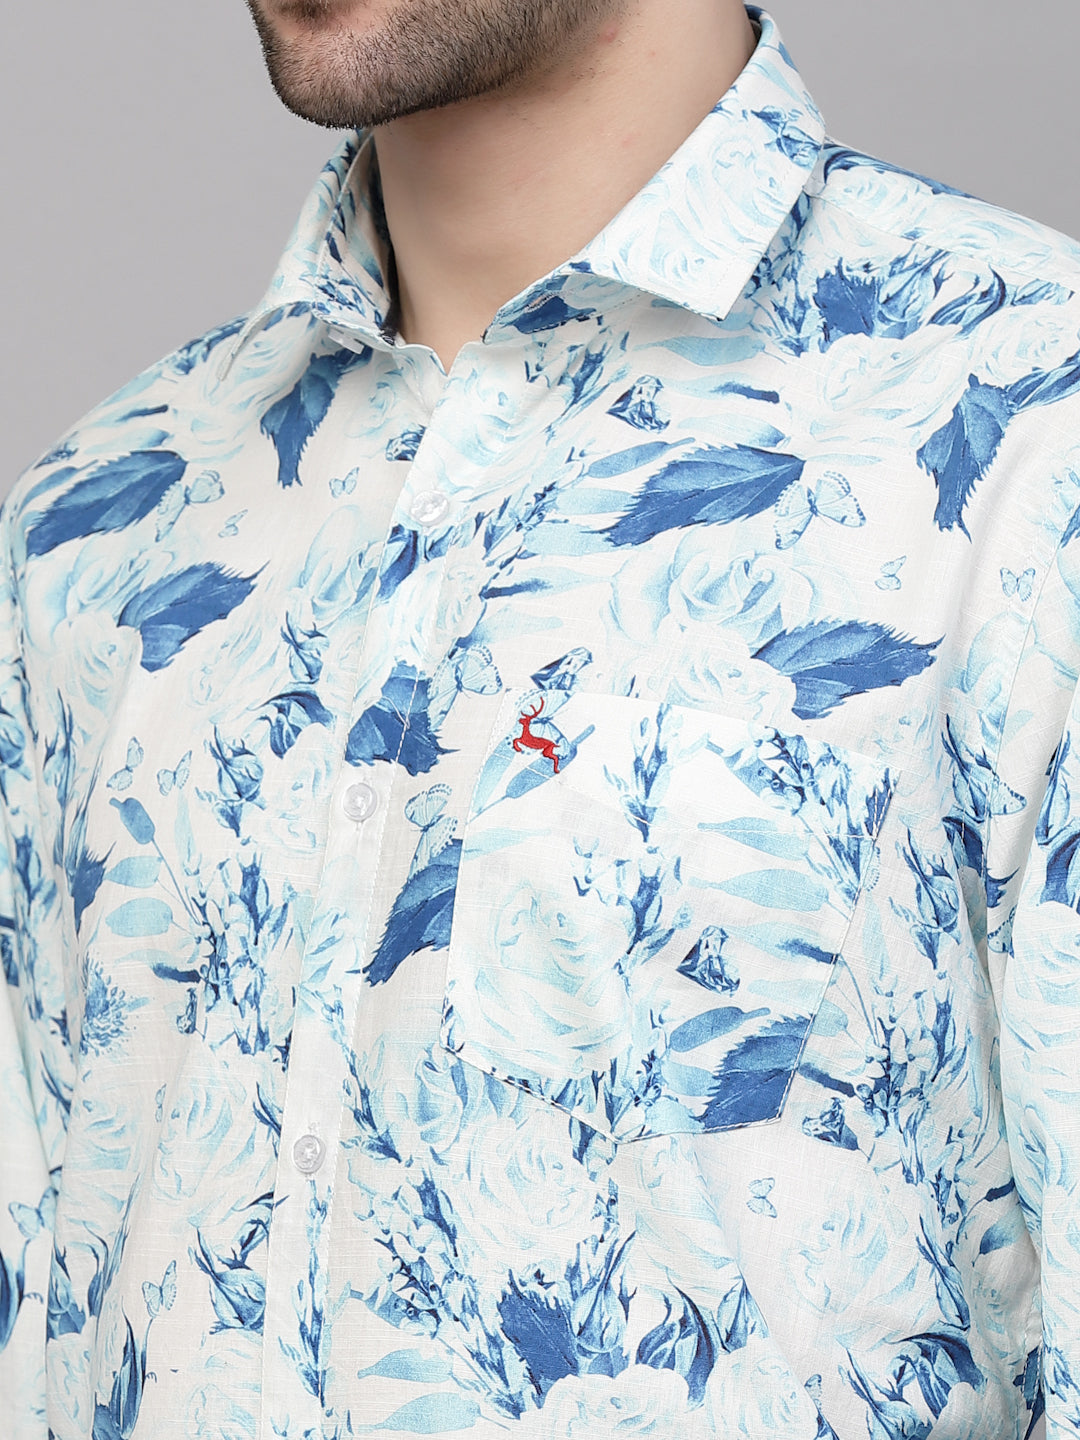 Valbone Men’s Digital Print Blue Leafs Printed Regular Fit Casual Shirt Full Sleeves